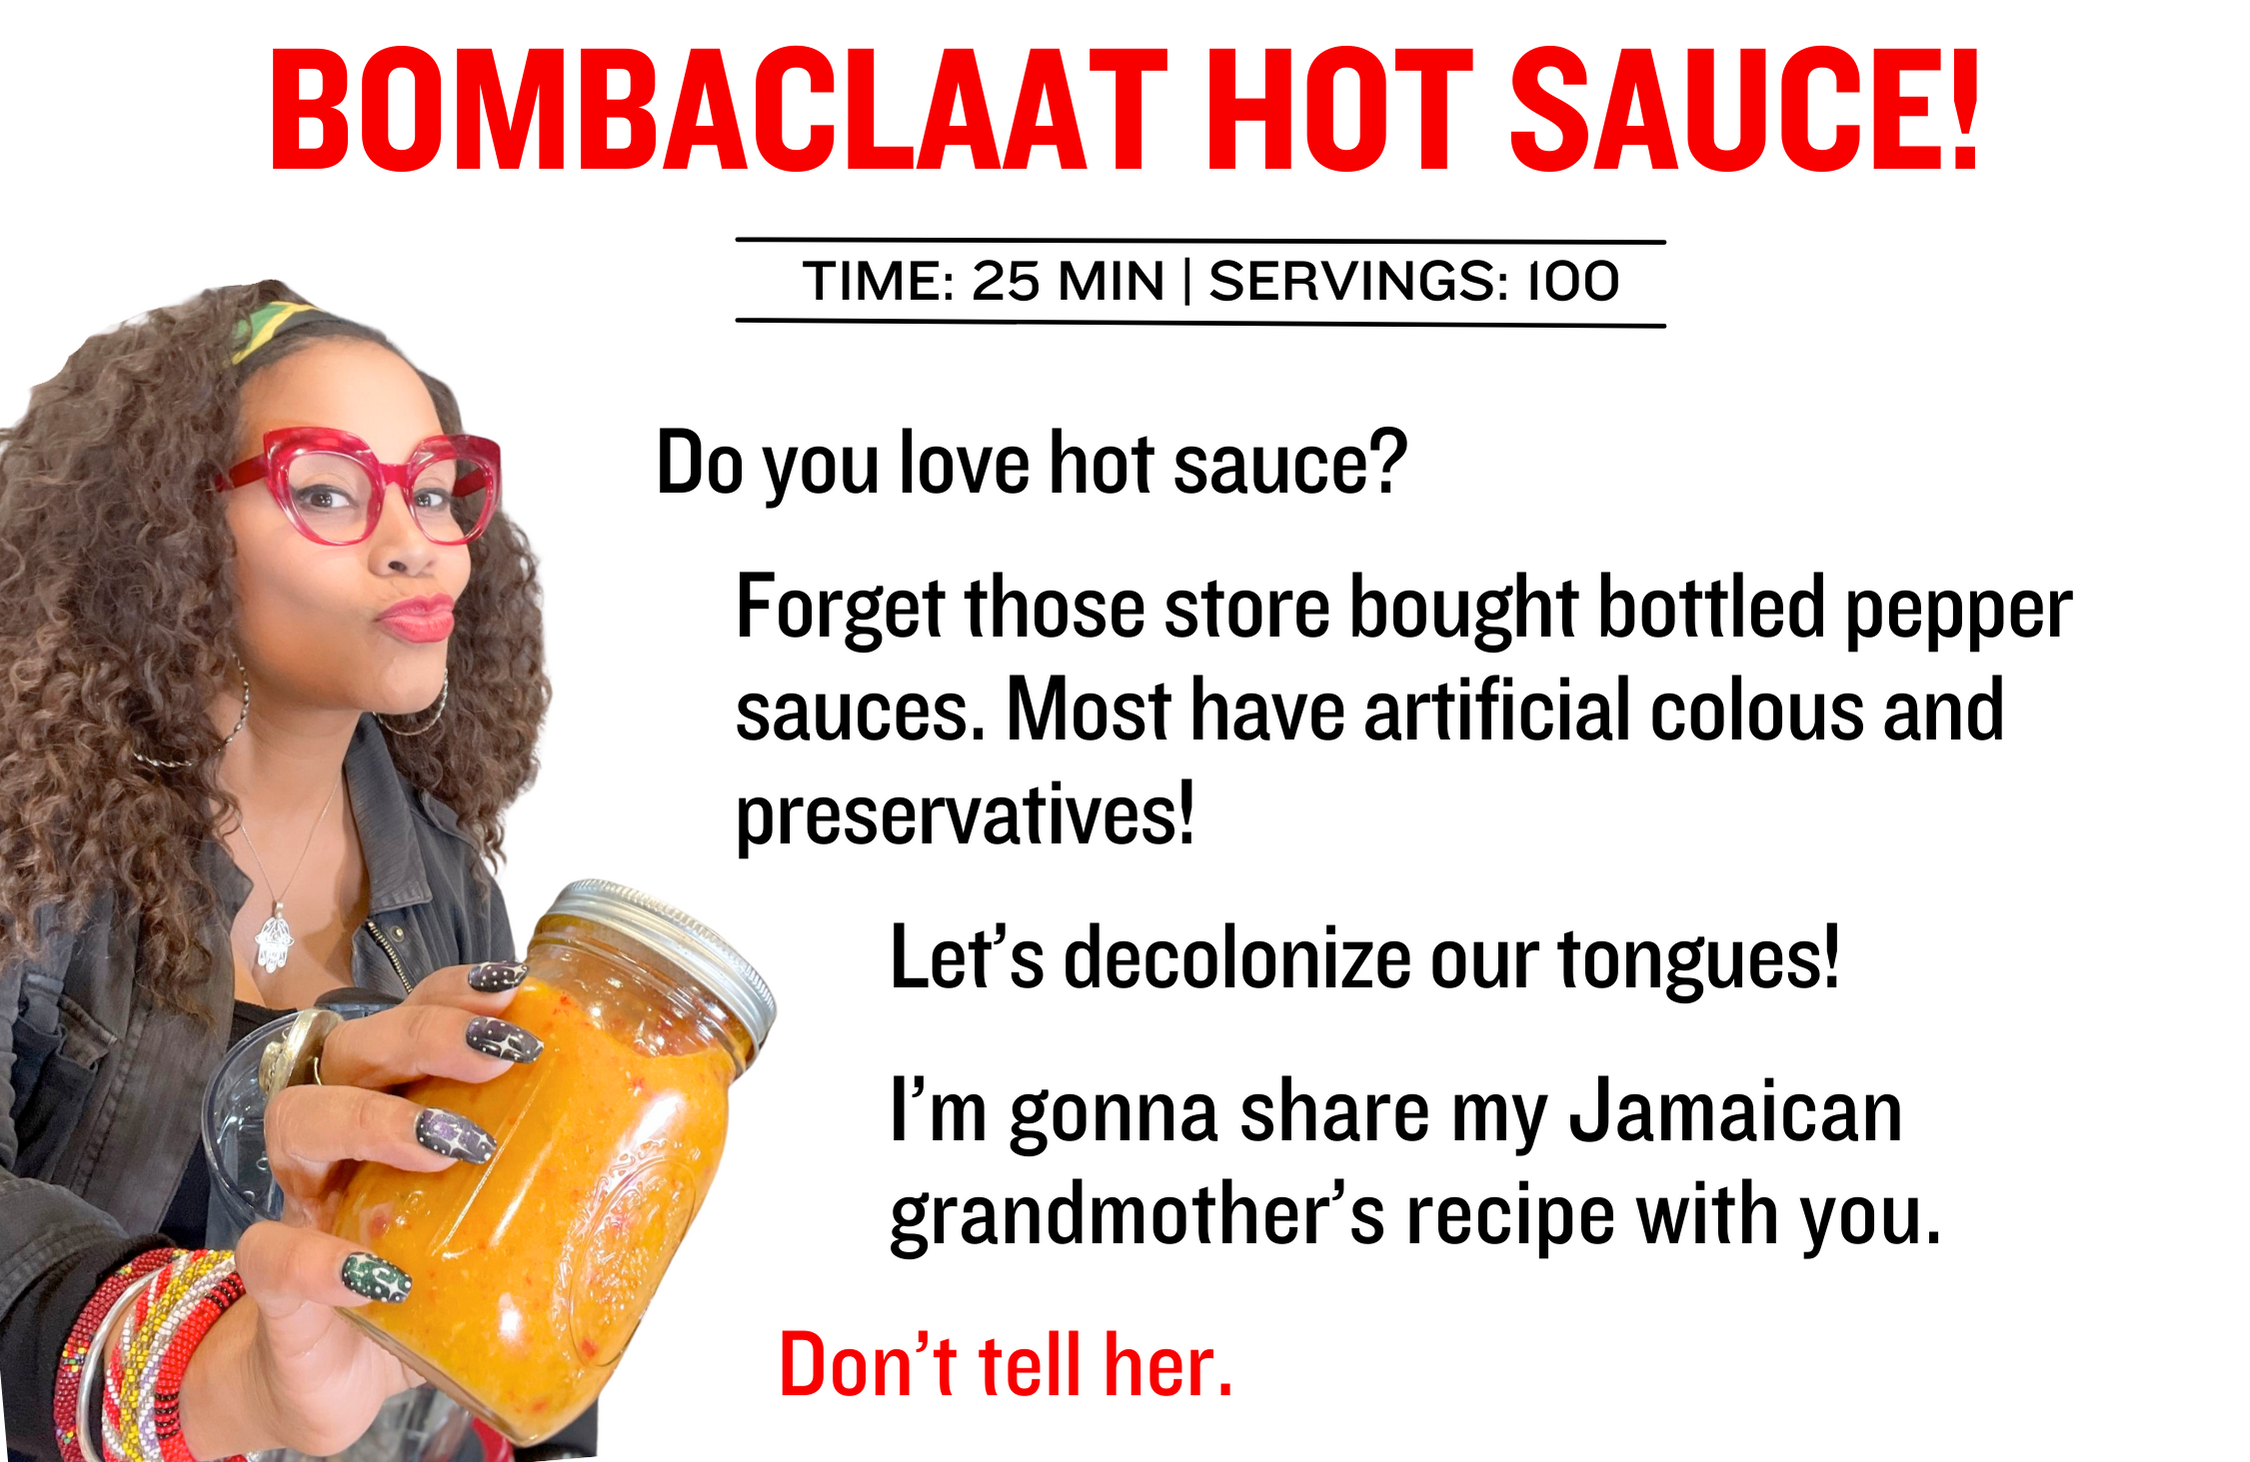 BOMBACLAAT Hot Sauce!